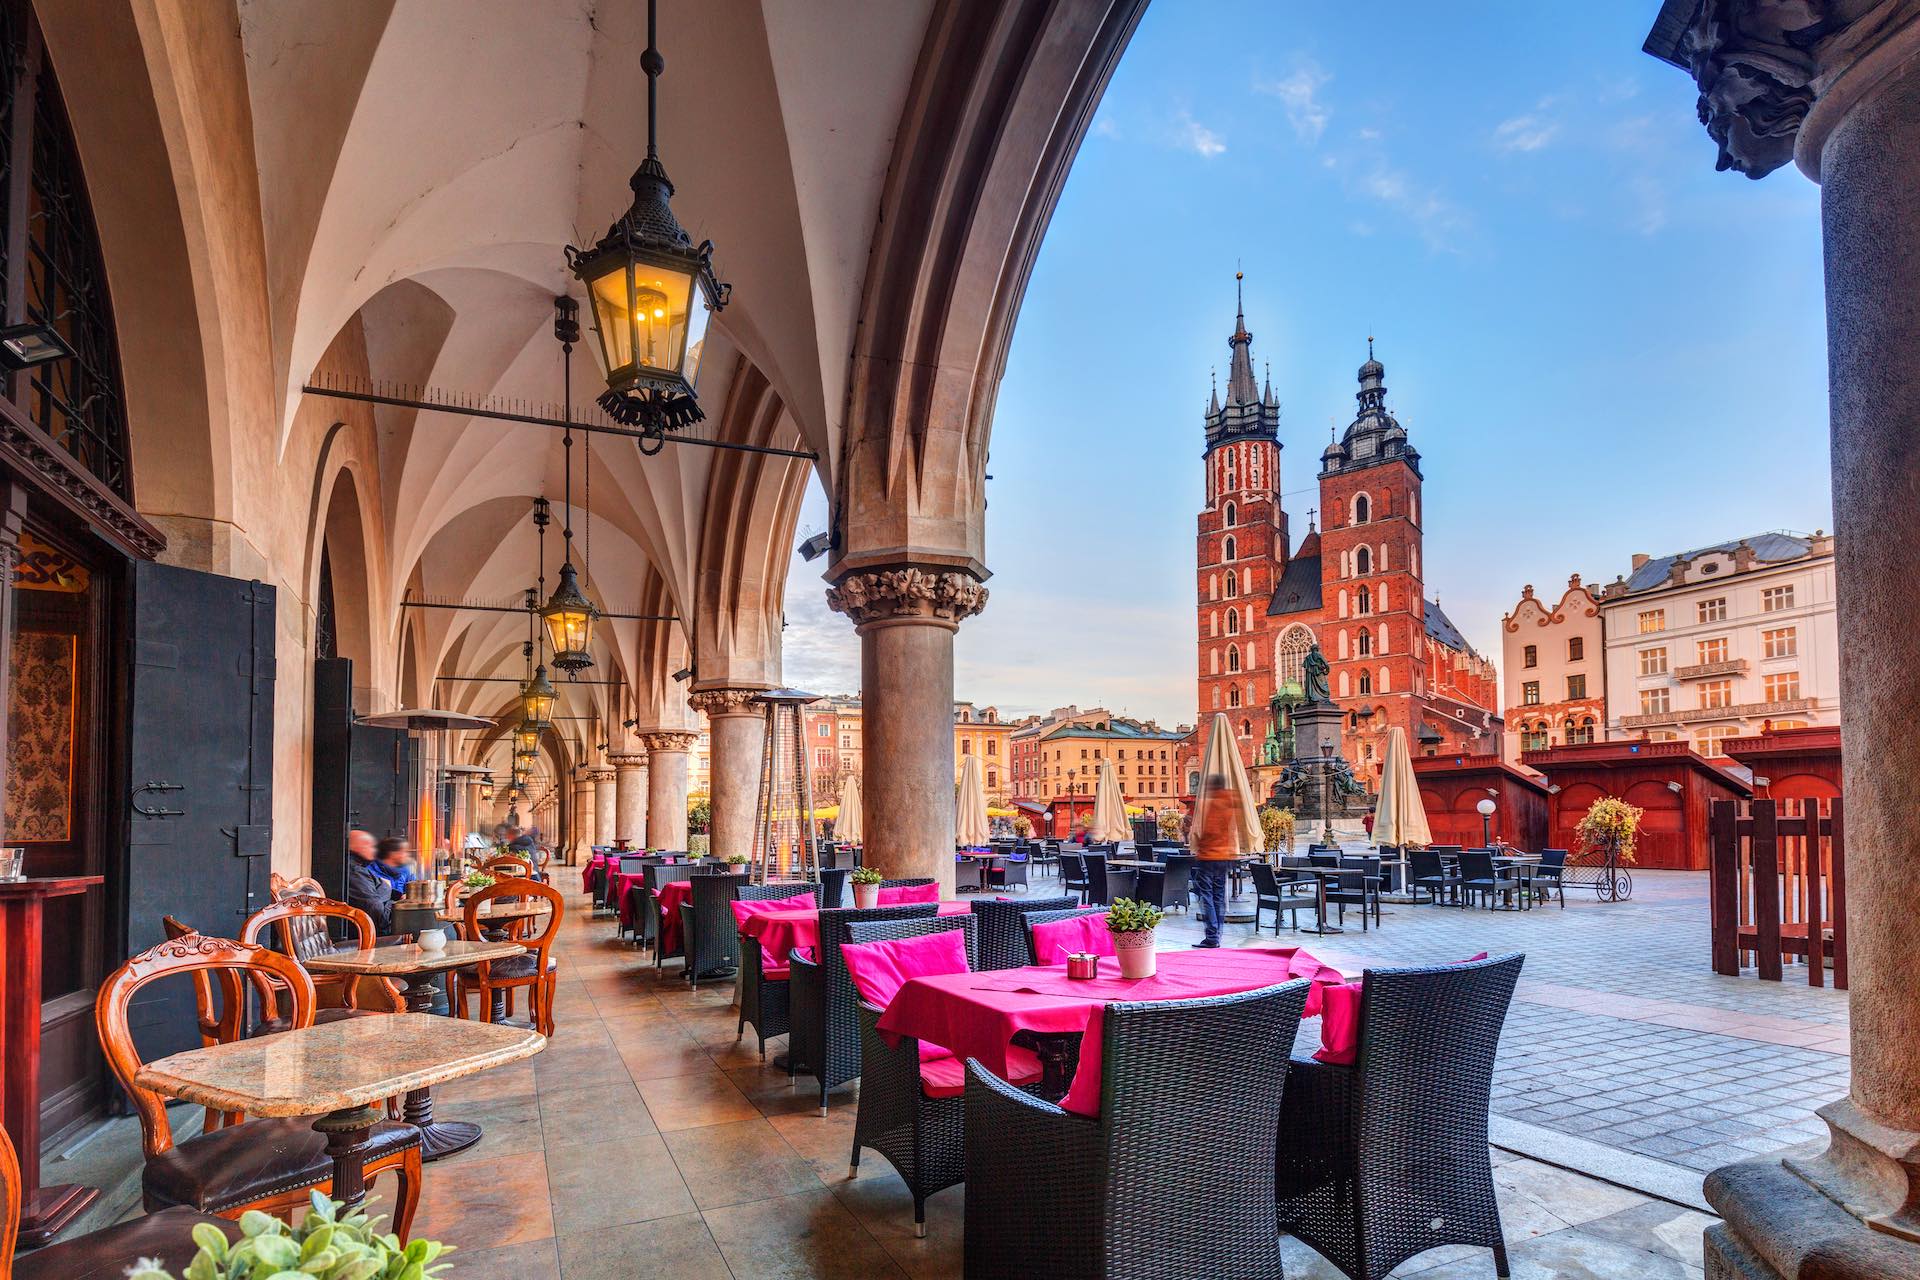 Why is Krakow so popular among international tourists?